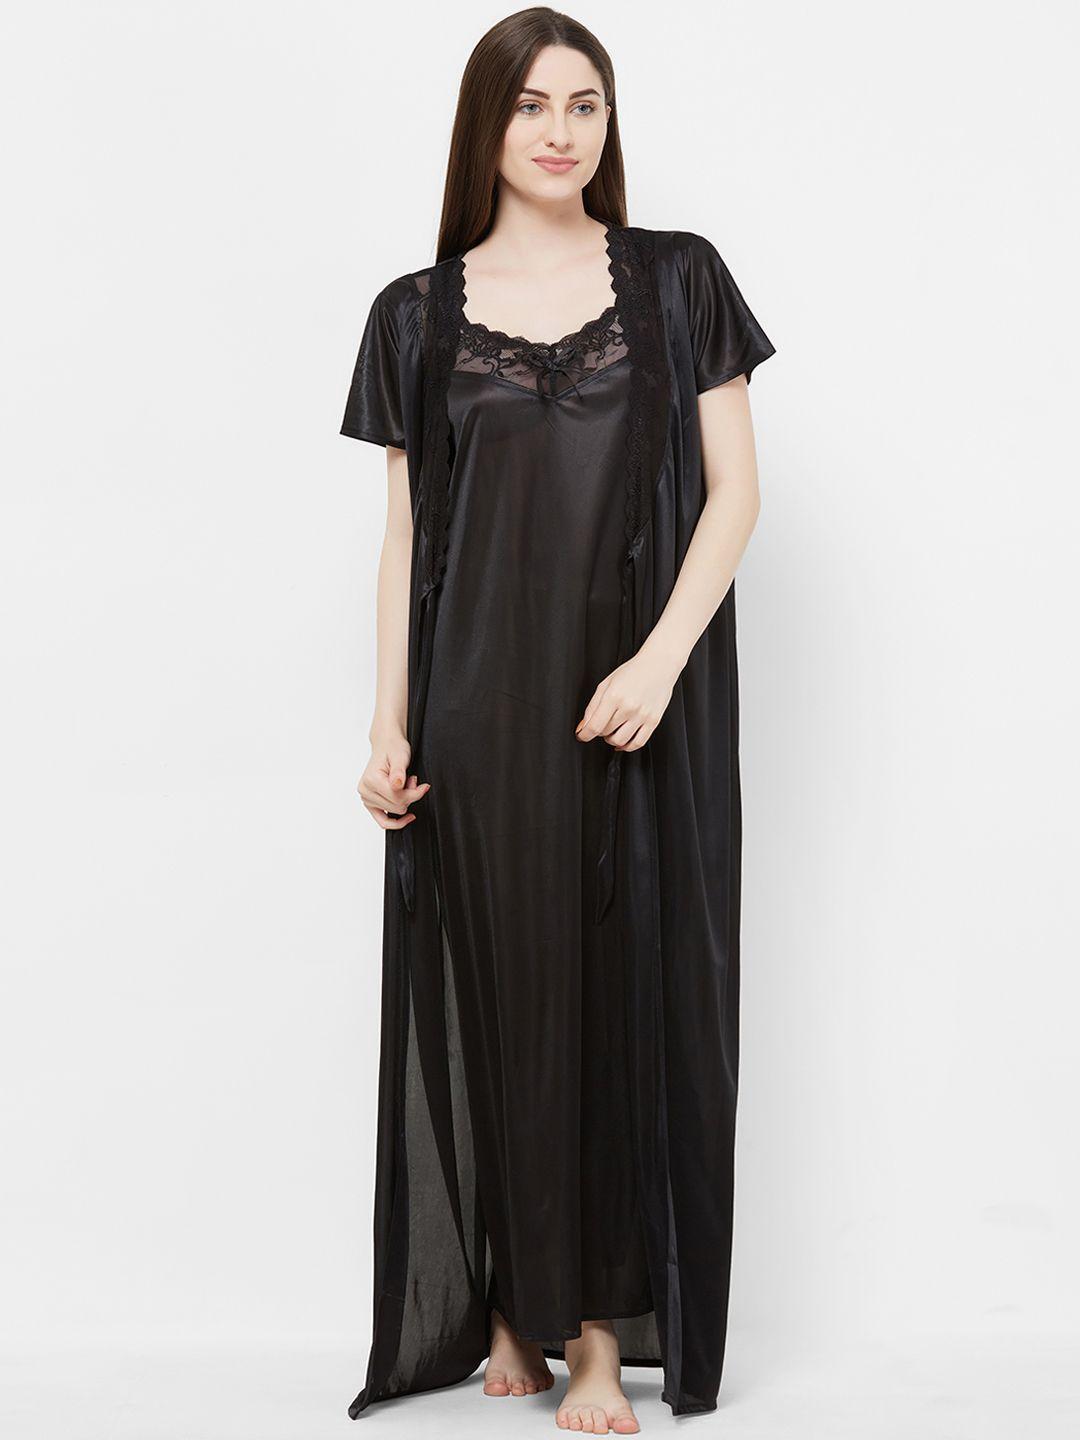 fashionrack women black solid nightdress